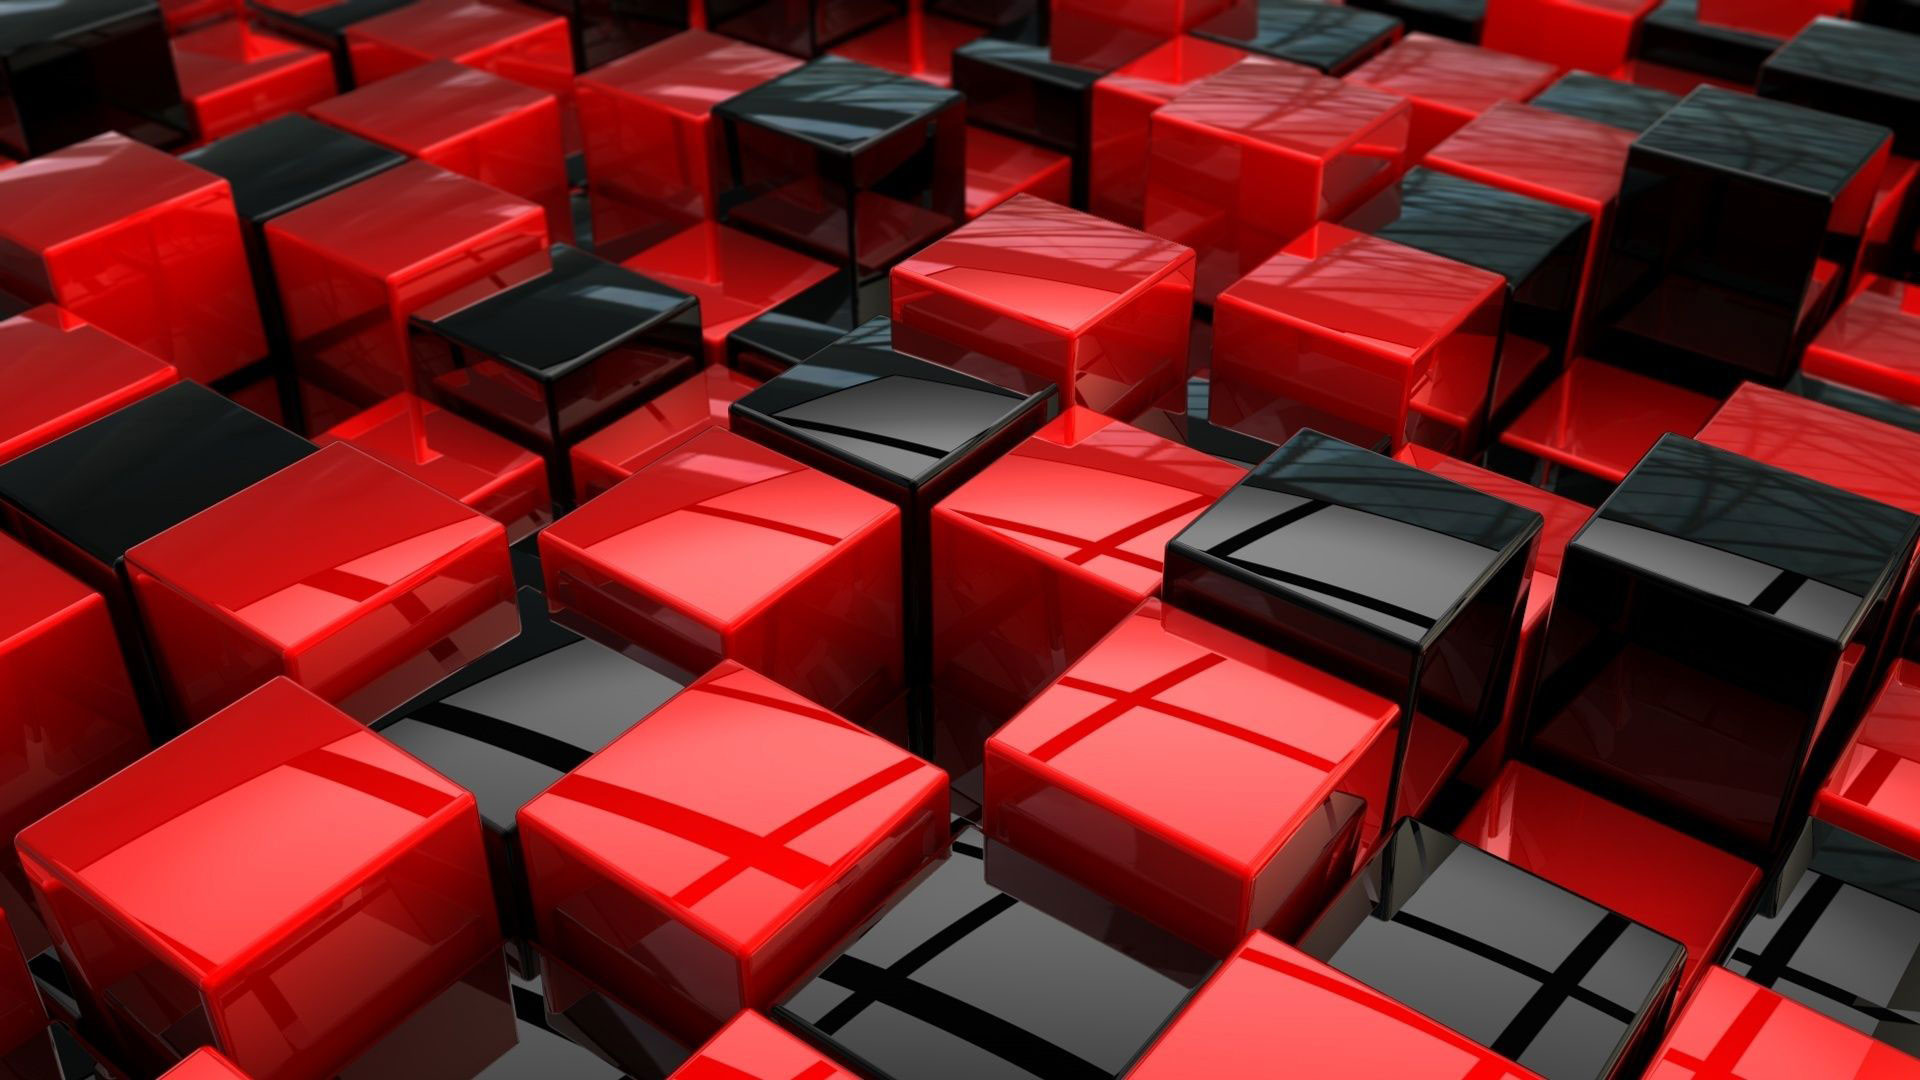 1920x1080 hd pics photos red and black 3d cubes desktop background wallpaper